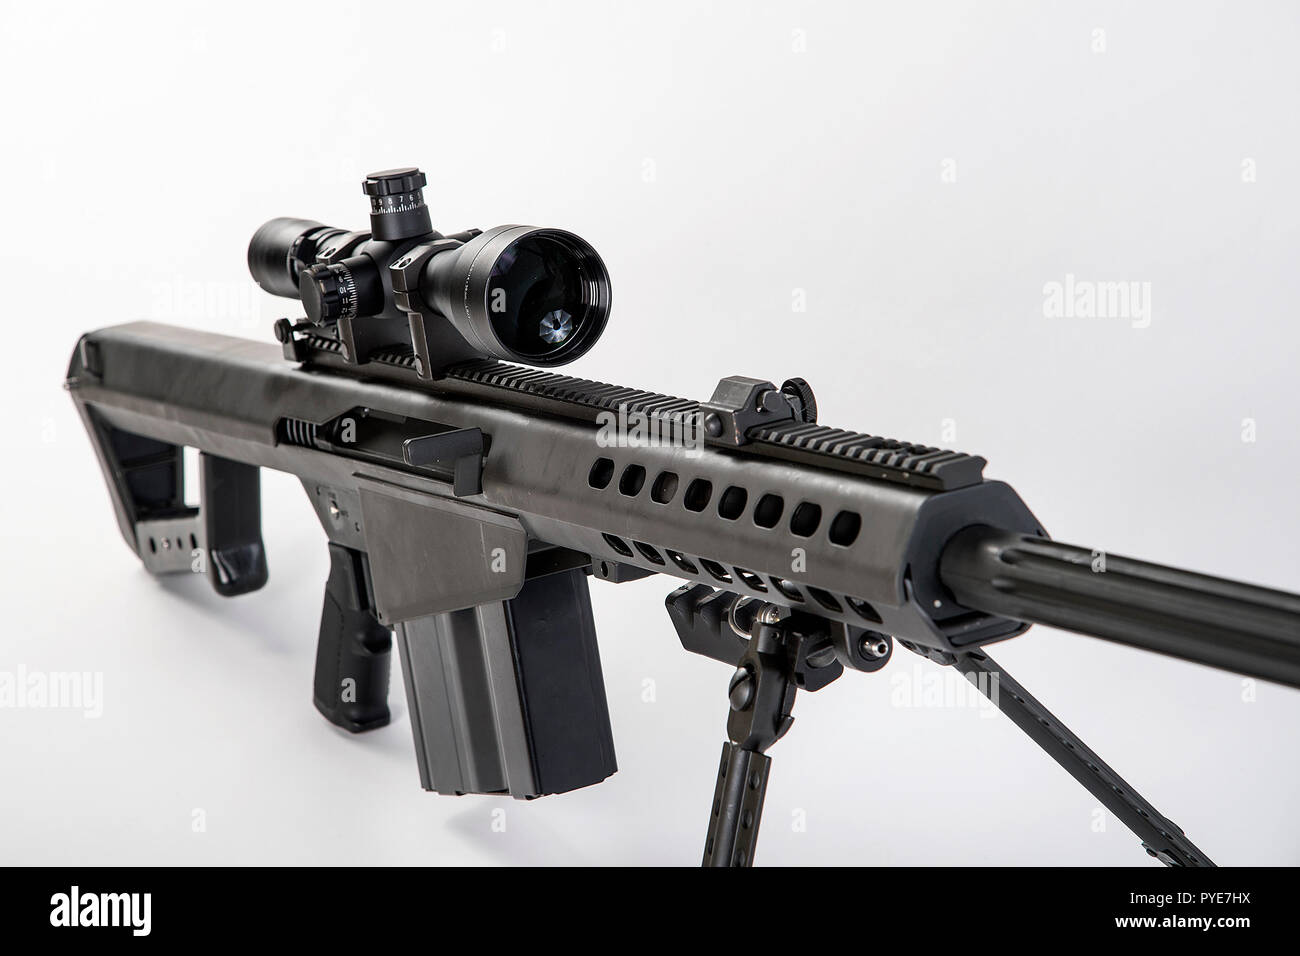 DVIDS - Images - M107 .50 Caliber Sniper Rifle [Image 7 of 14]